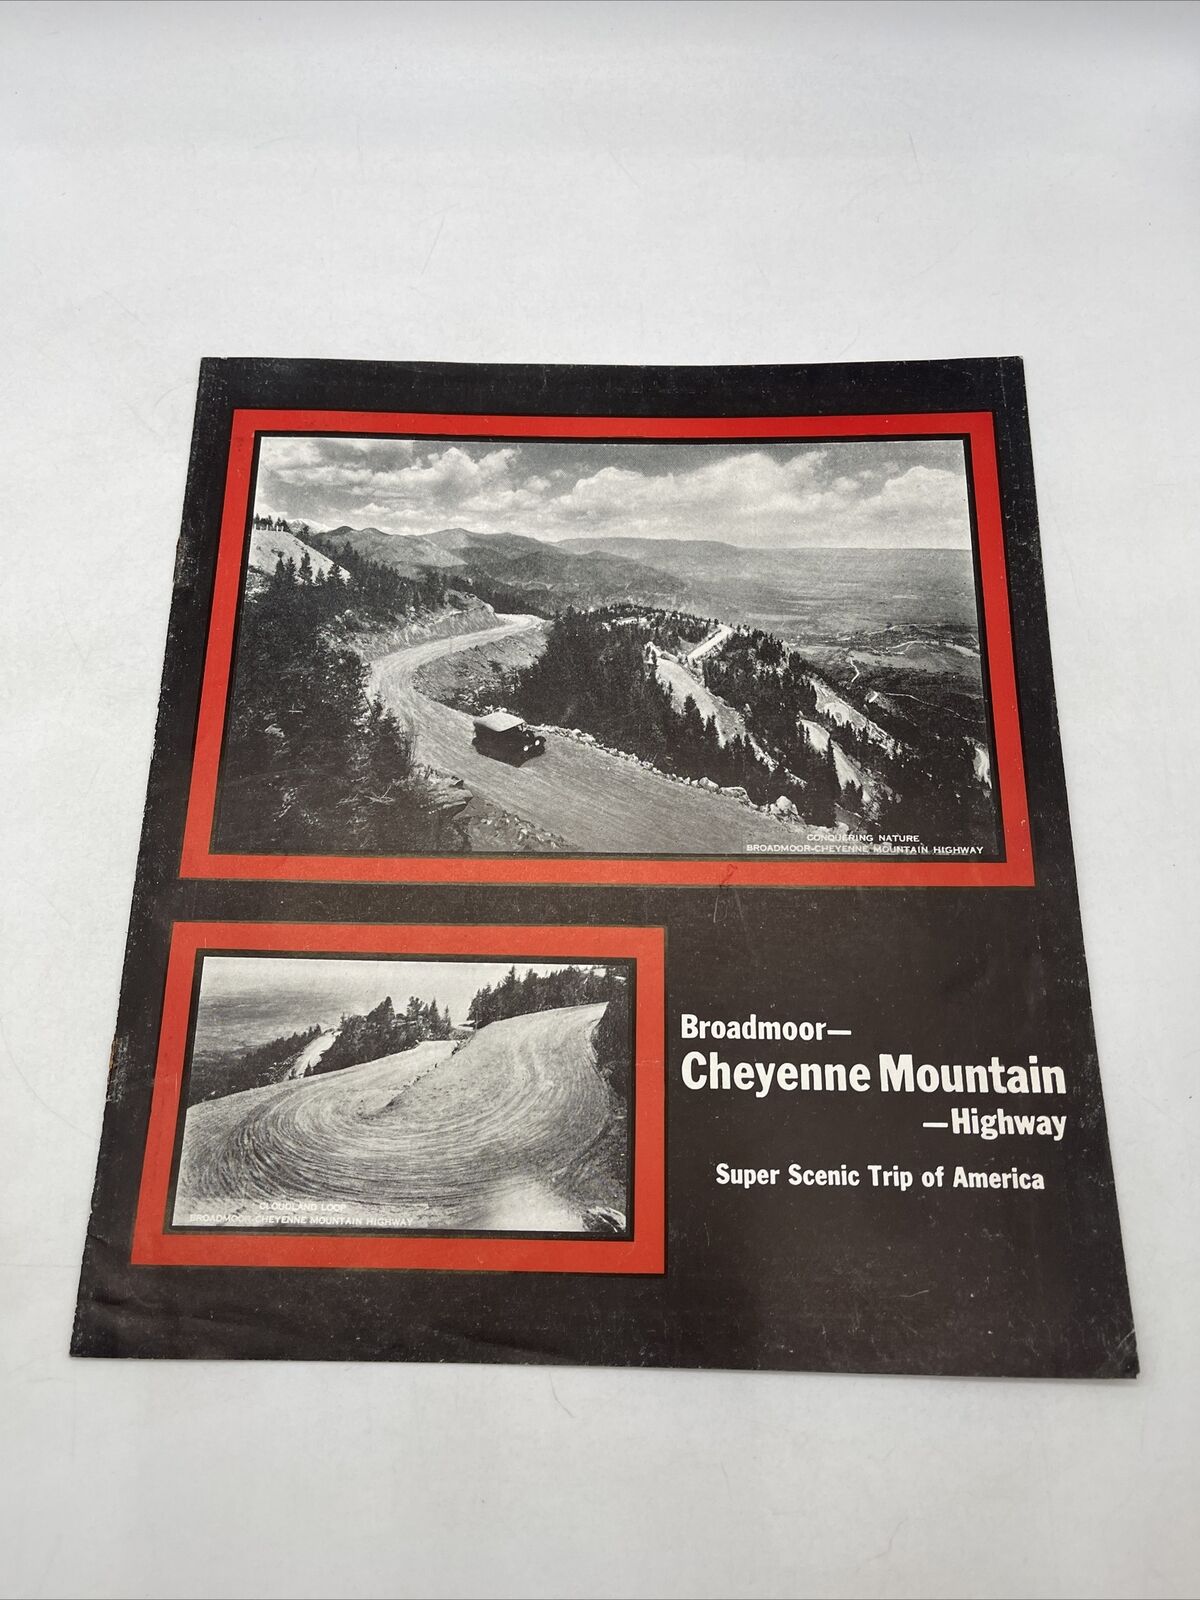 Vintage Broadmoor Cheyenne Mountain Highway Travel Brochure 1920s Colorado